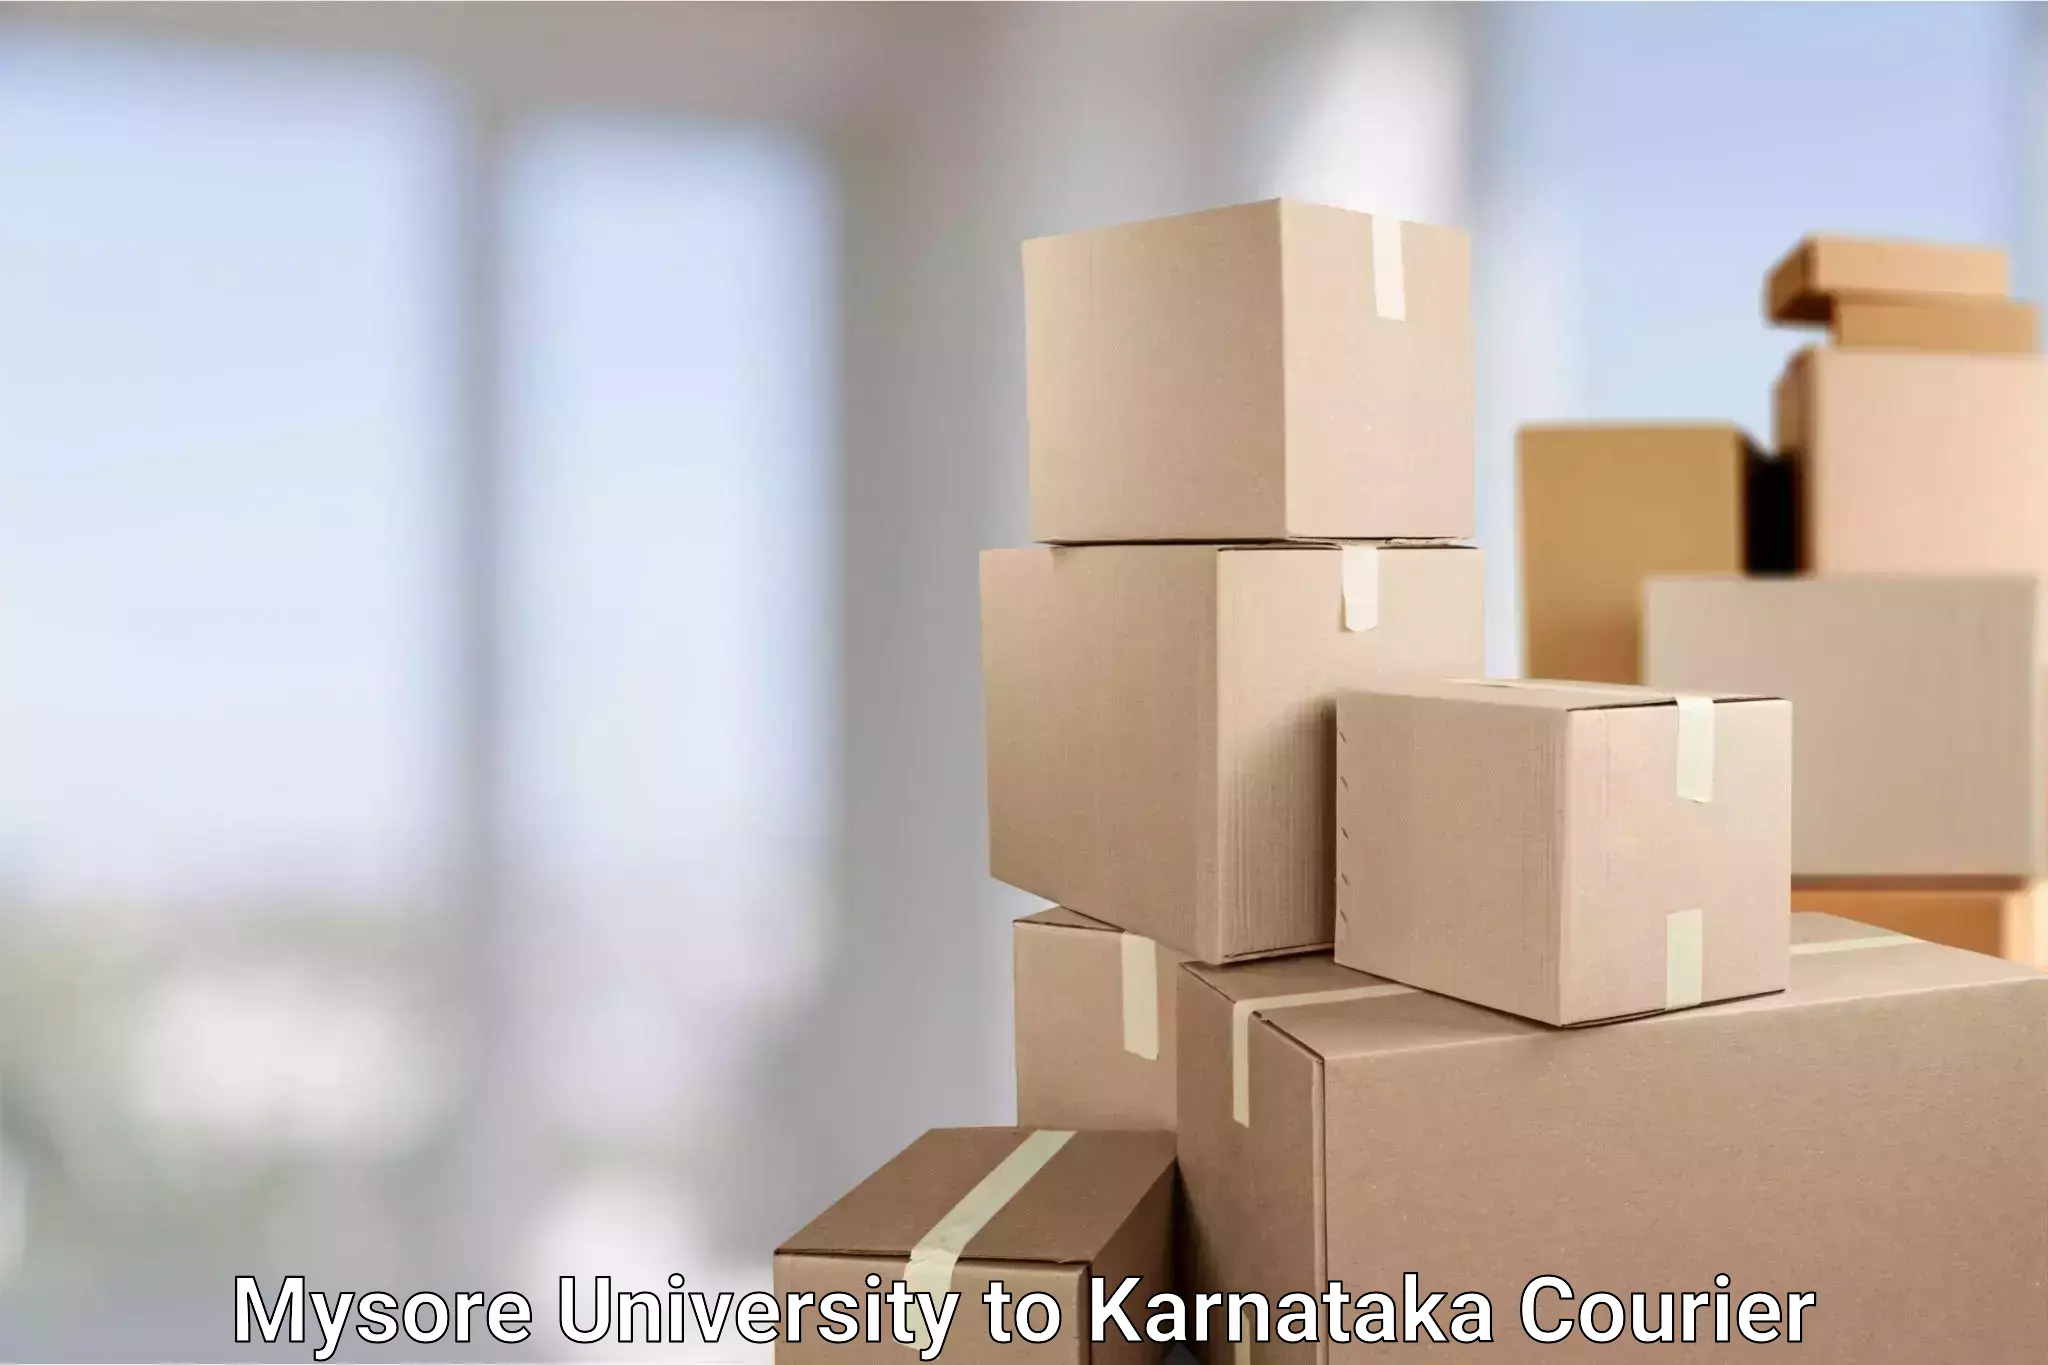 International courier networks Mysore University to Karnataka